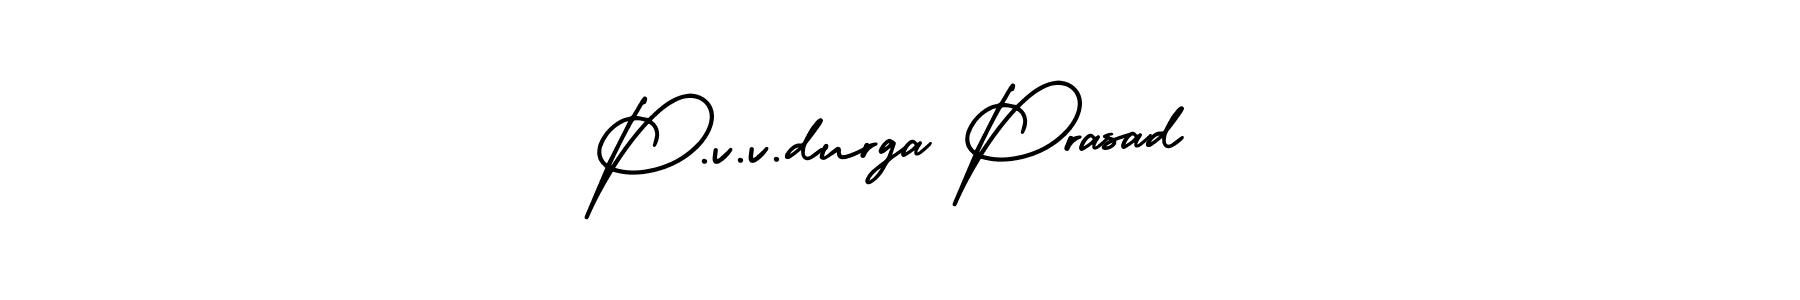 Use a signature maker to create a handwritten signature online. With this signature software, you can design (AmerikaSignatureDemo-Regular) your own signature for name P.v.v.durga Prasad. P.v.v.durga Prasad signature style 3 images and pictures png